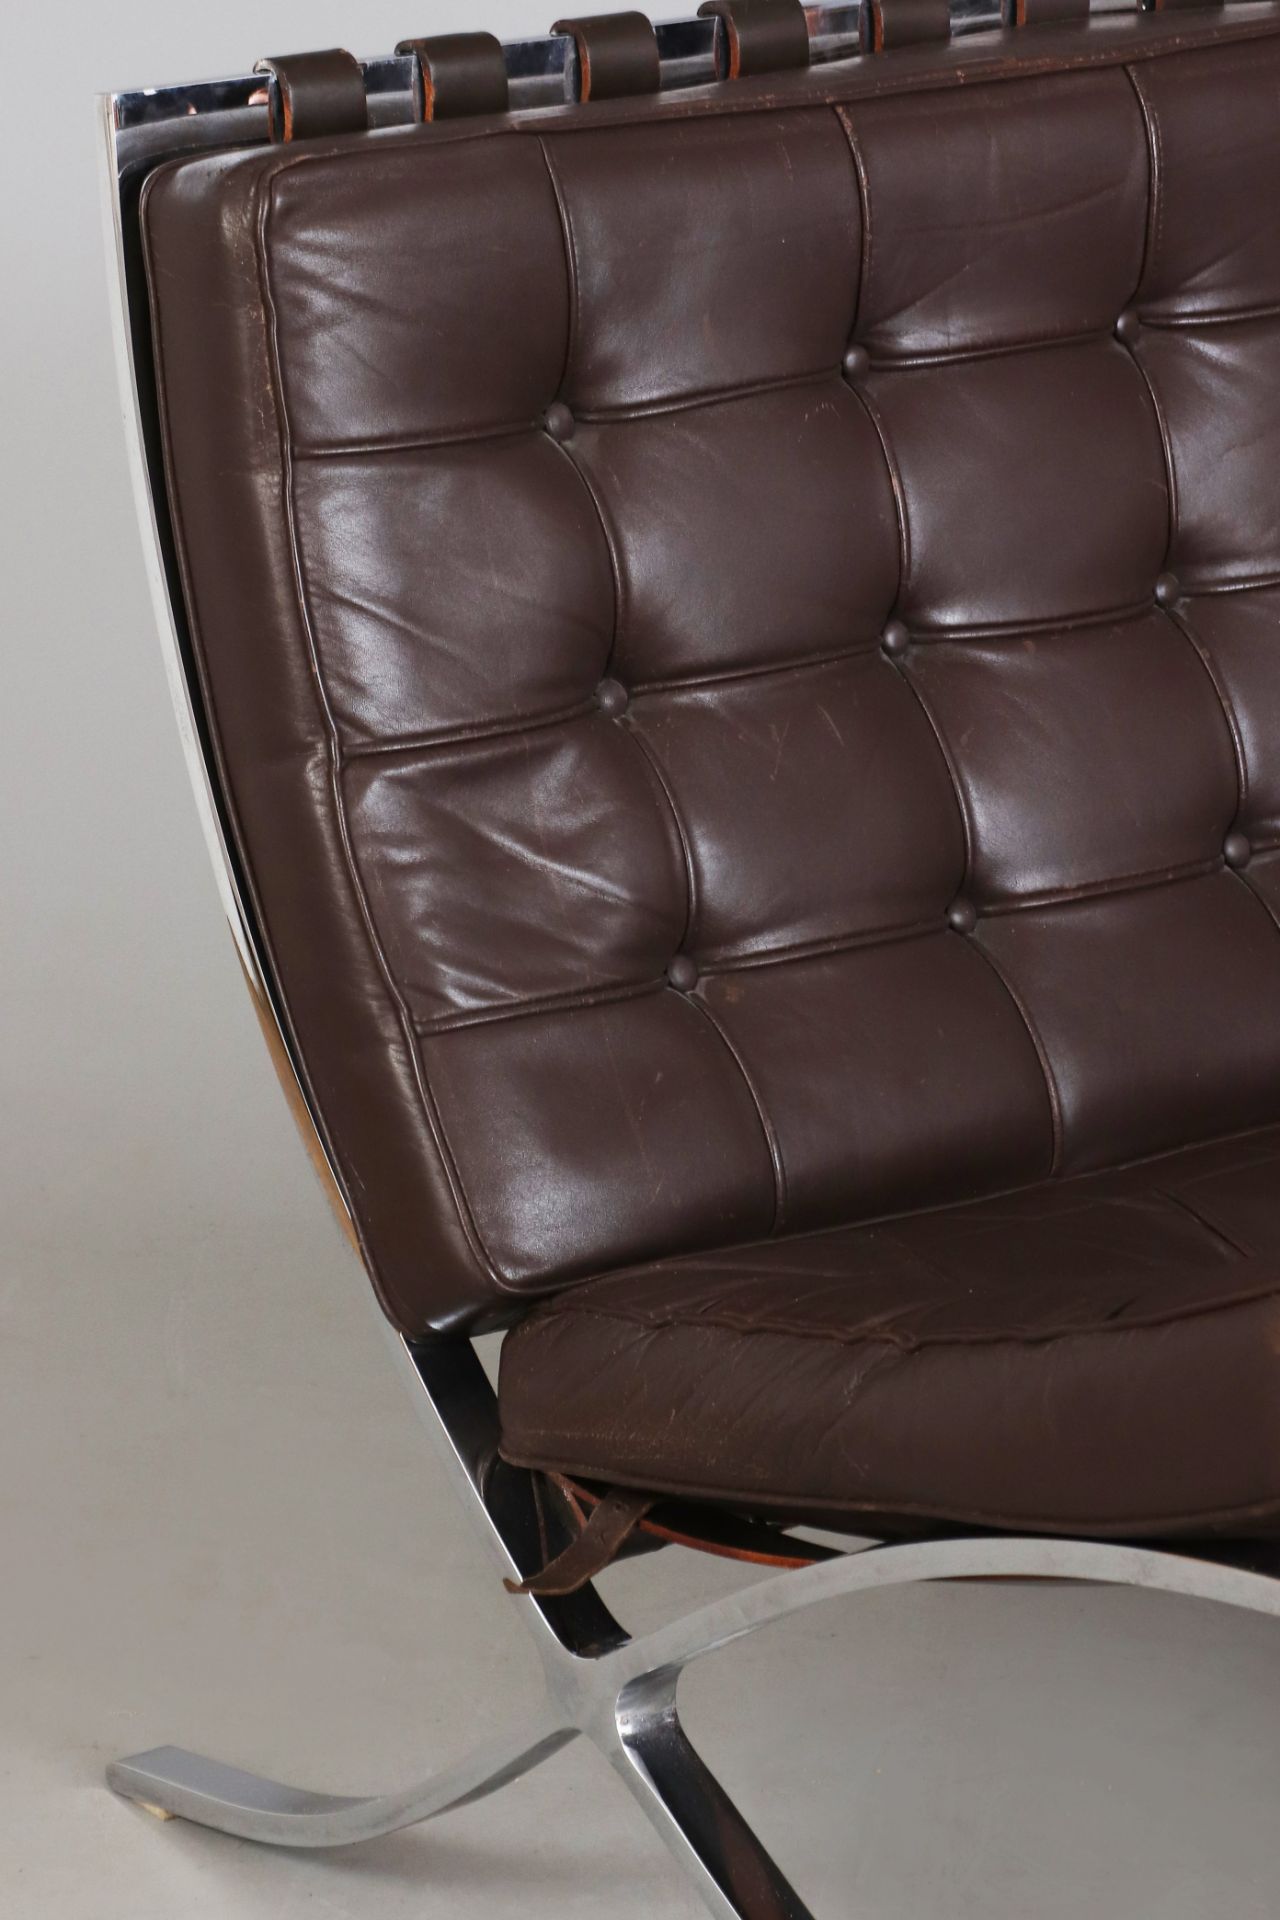 MIES VAN DER ROHE Barcelona Chair mit Ottomane - Image 3 of 5